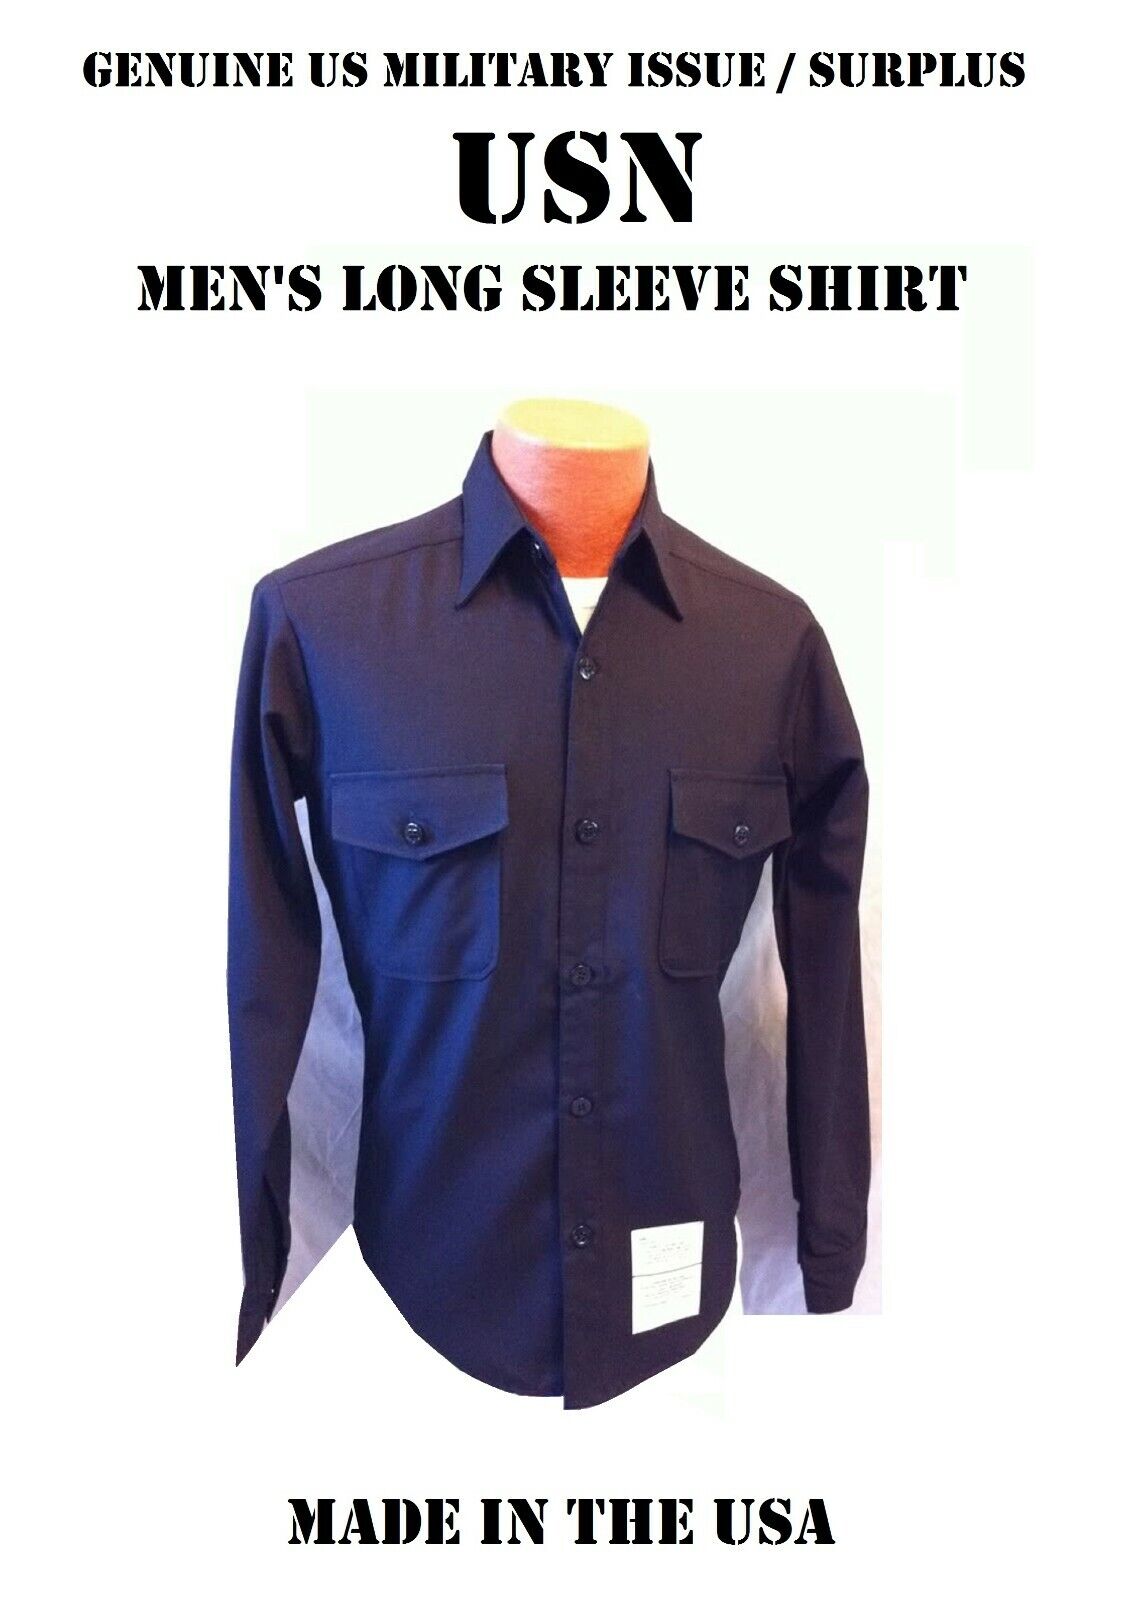 16.5 x 37 US NAVY SHIRT MEN'S LONG SLEEVE BLACK WINTER BLUE JOHNNY CASH UNIFORM